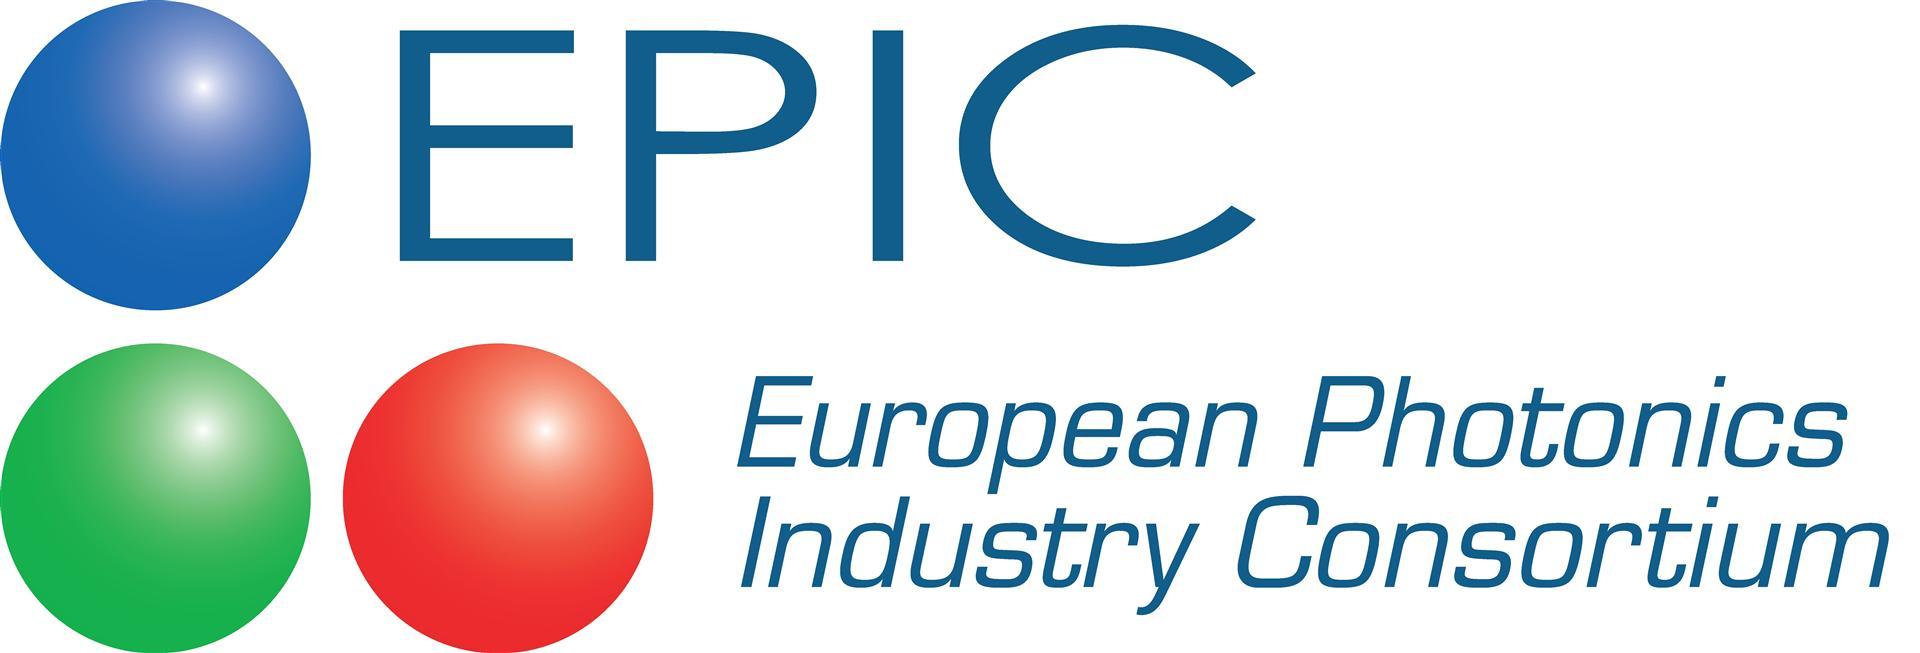 Epic logo low resolution